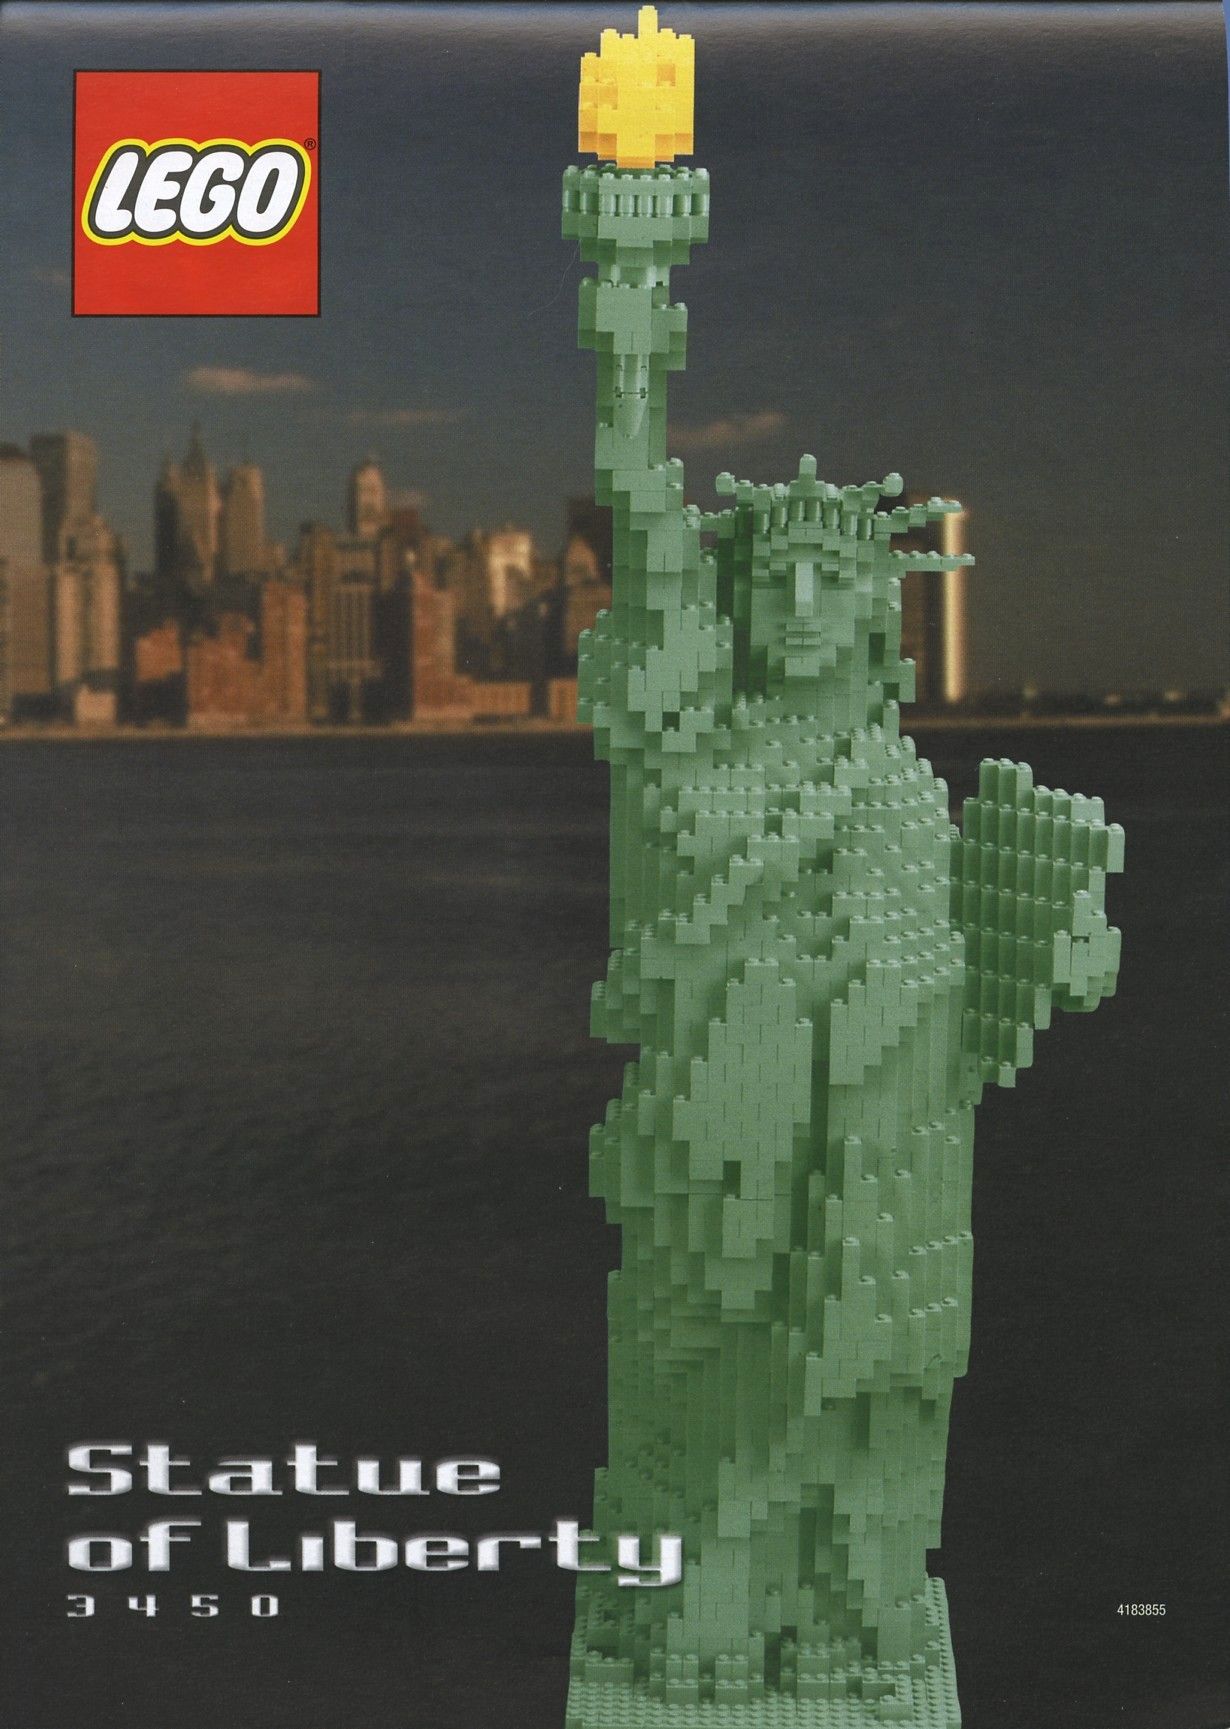 LEGO 3450 Statue of Liberty